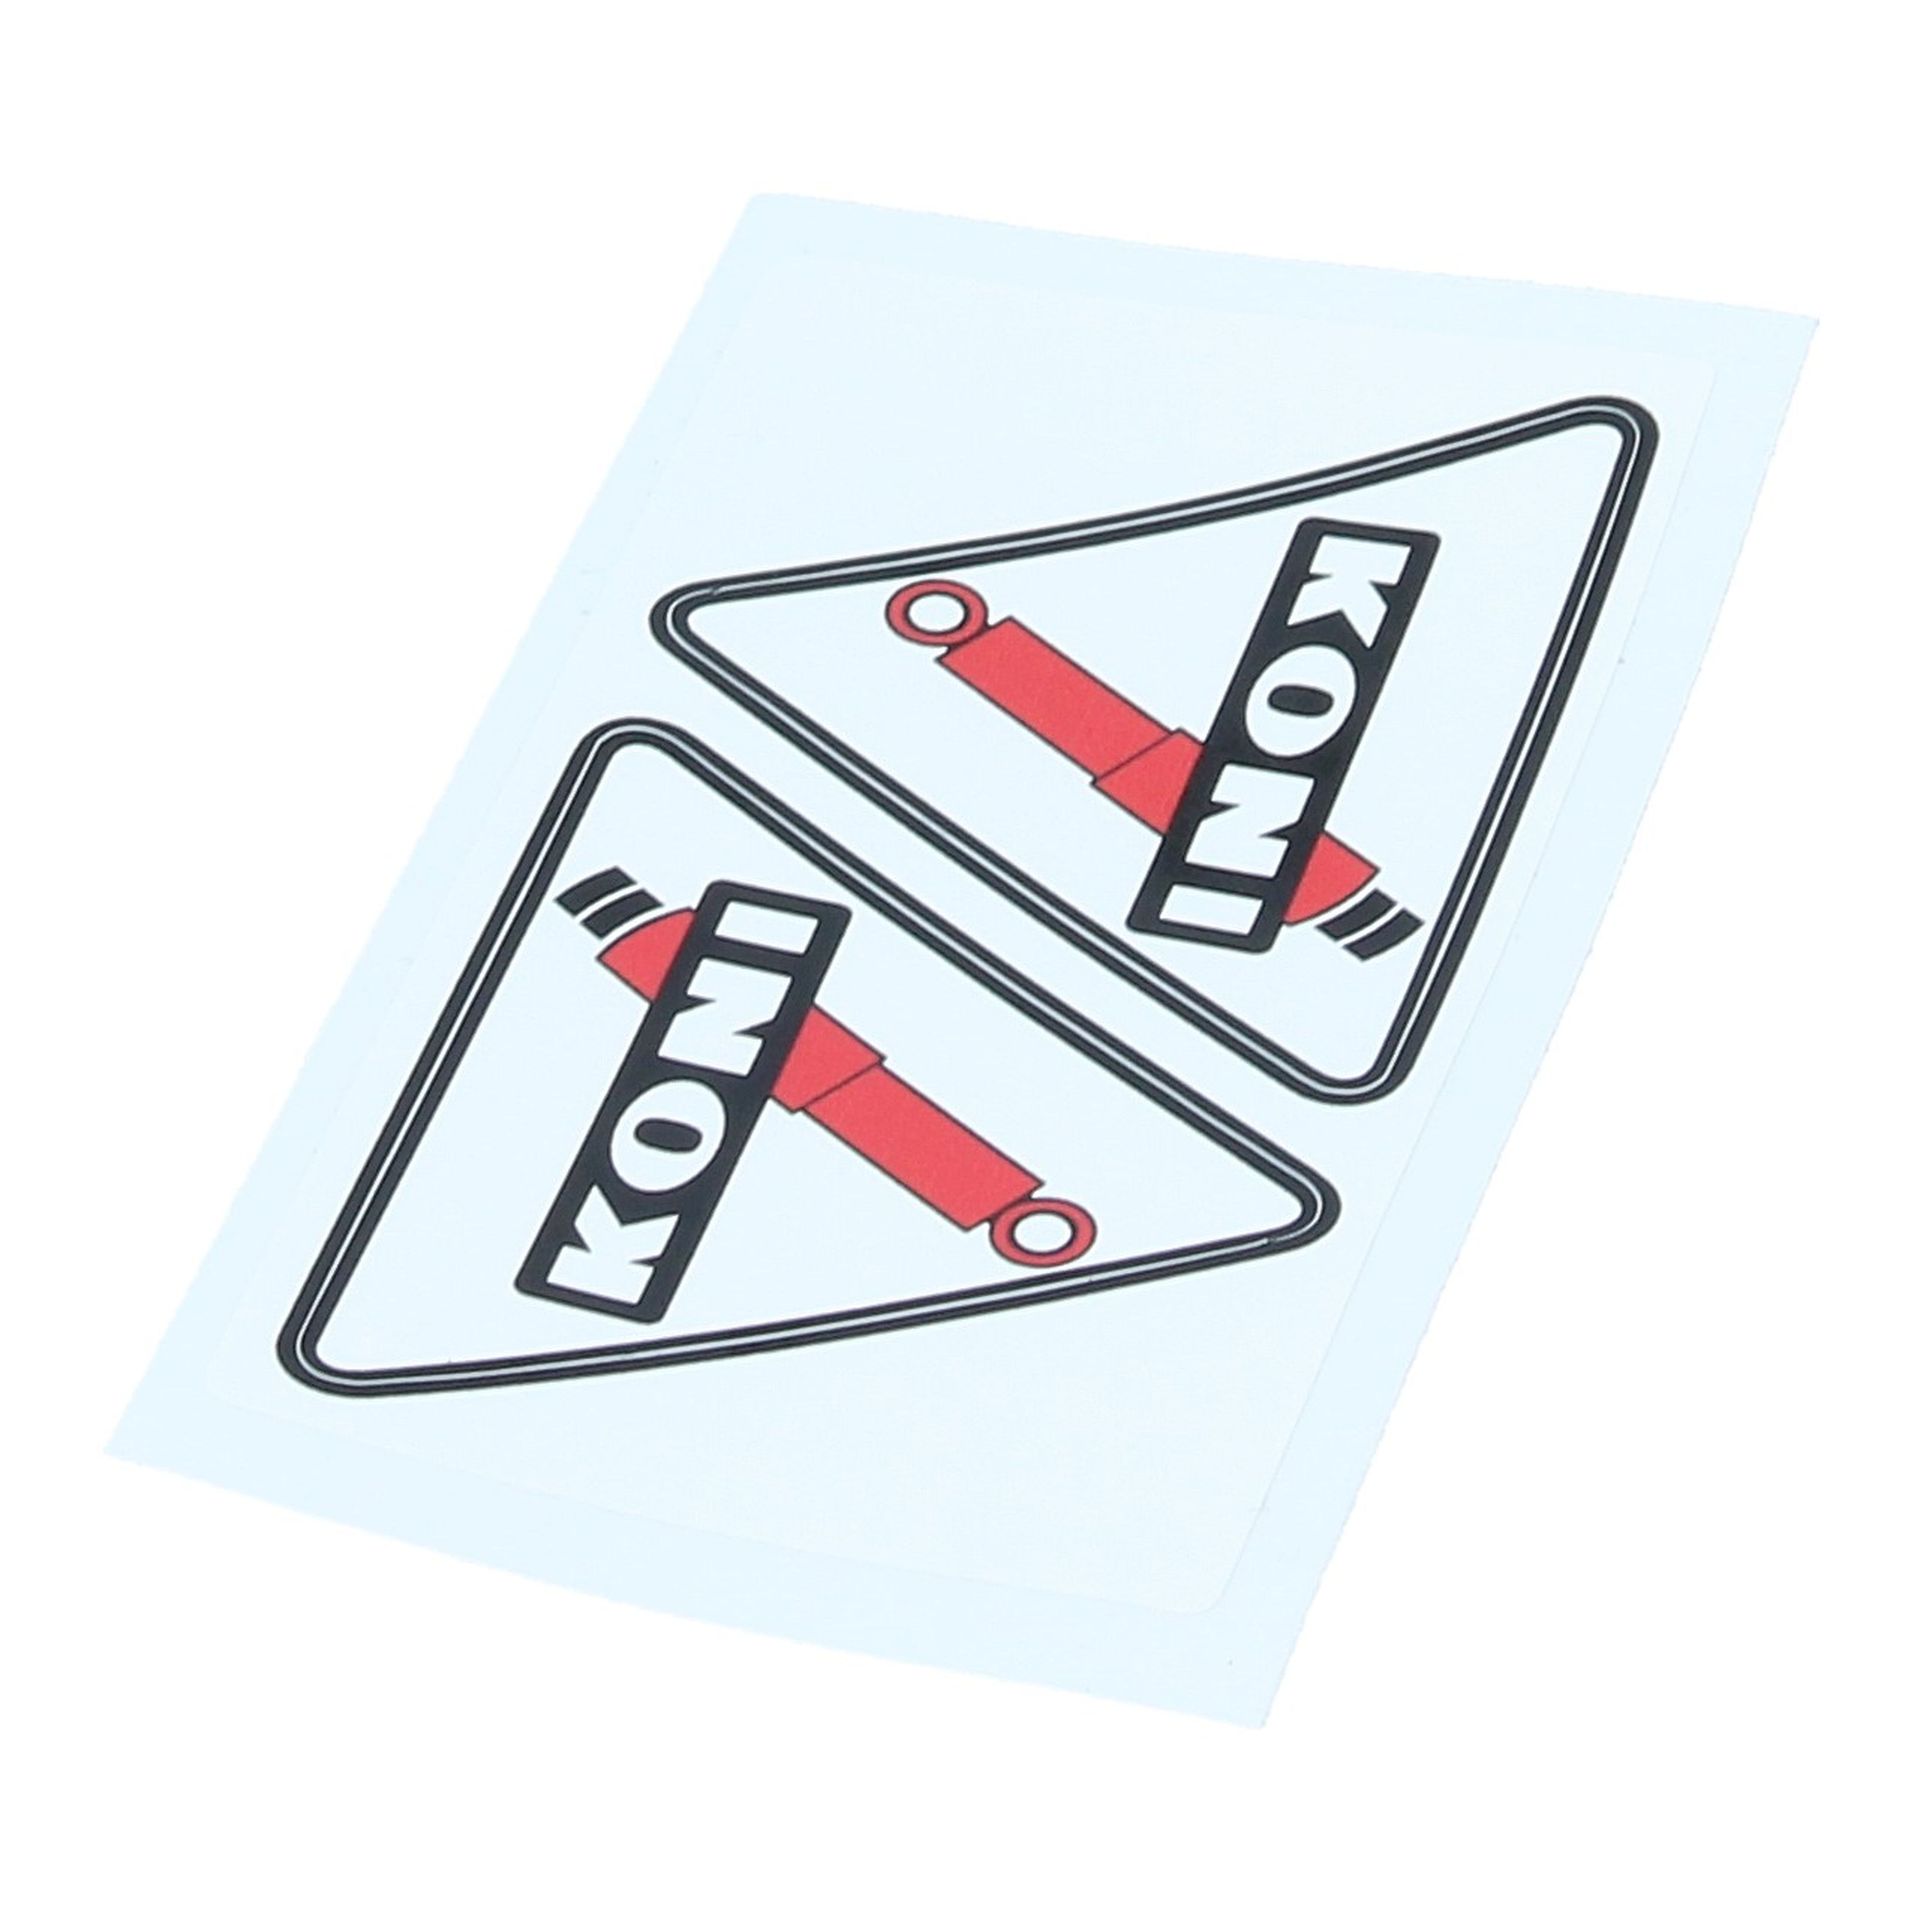 Koni Triangular Shock Absorber Sticker